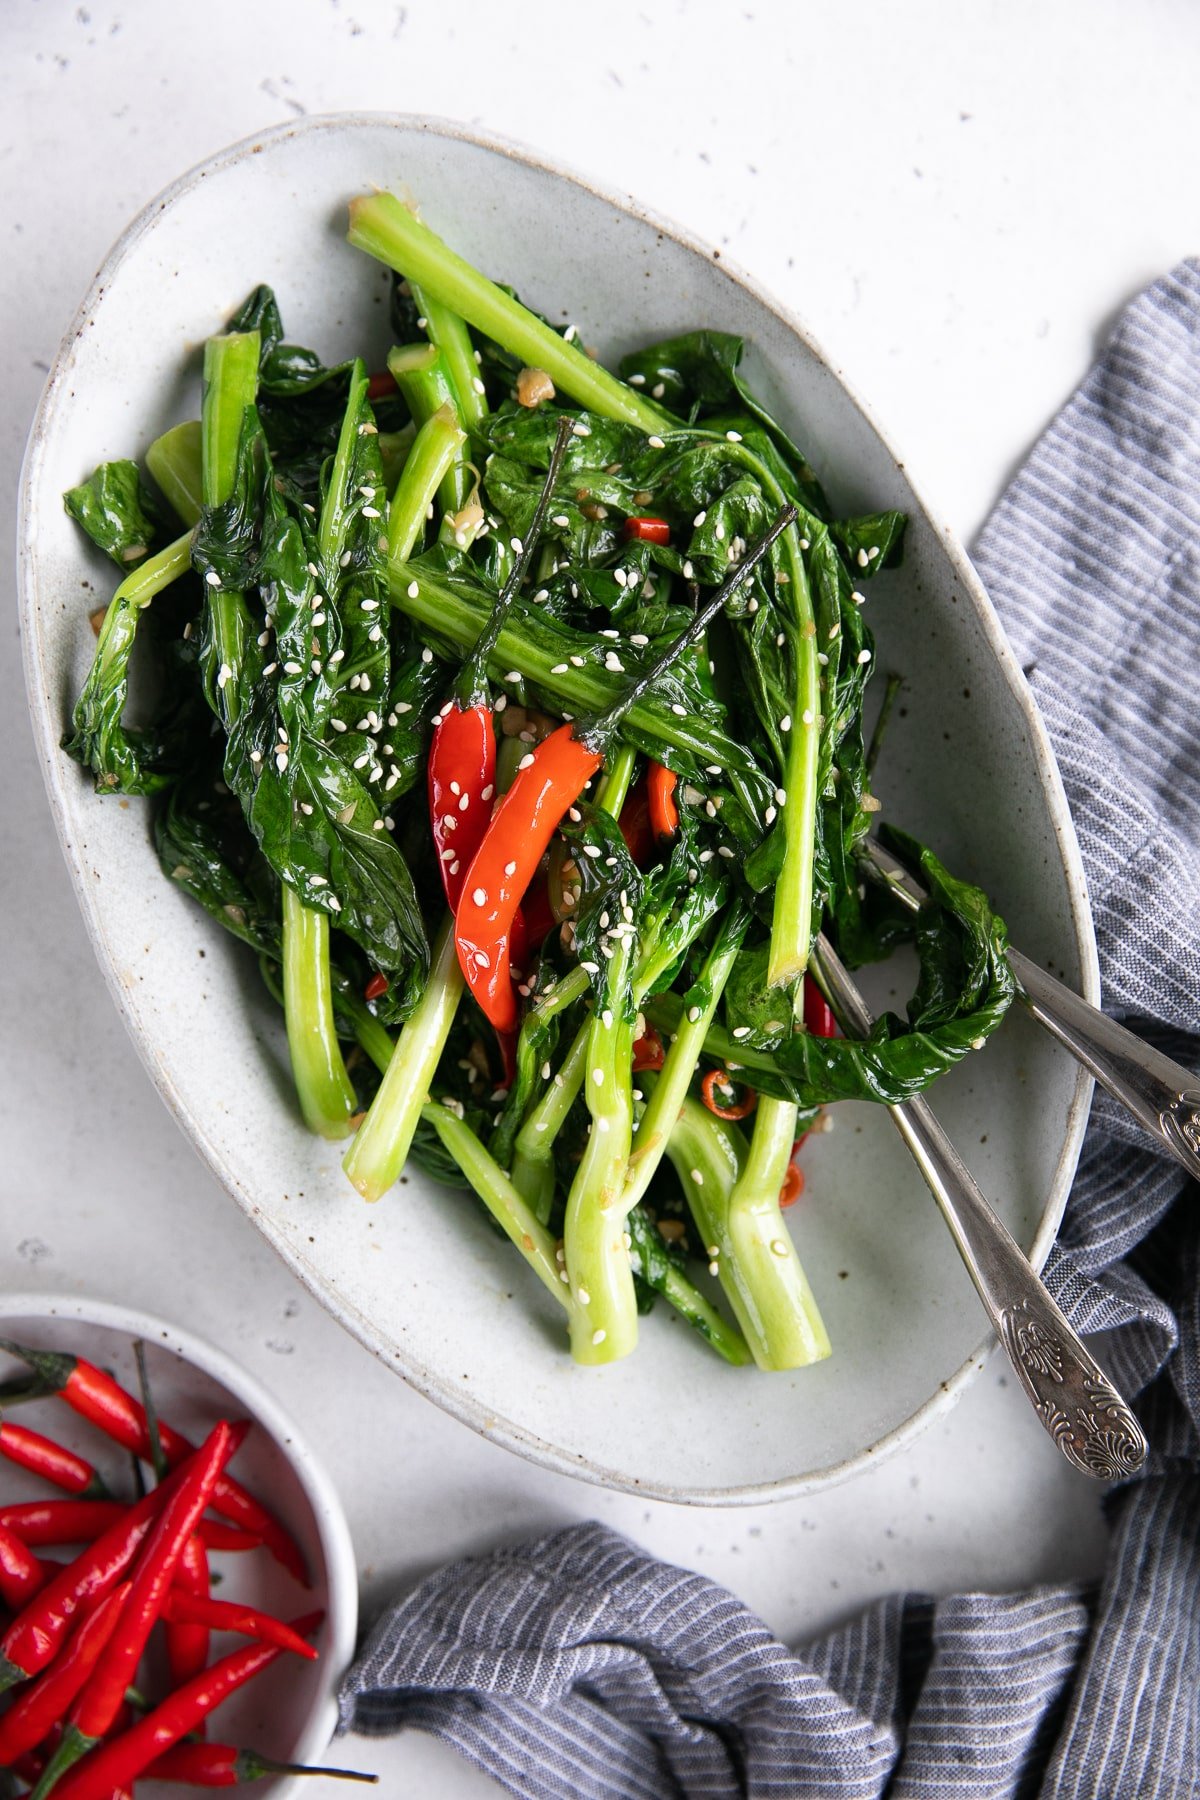 Chinese Broccoli Recipe